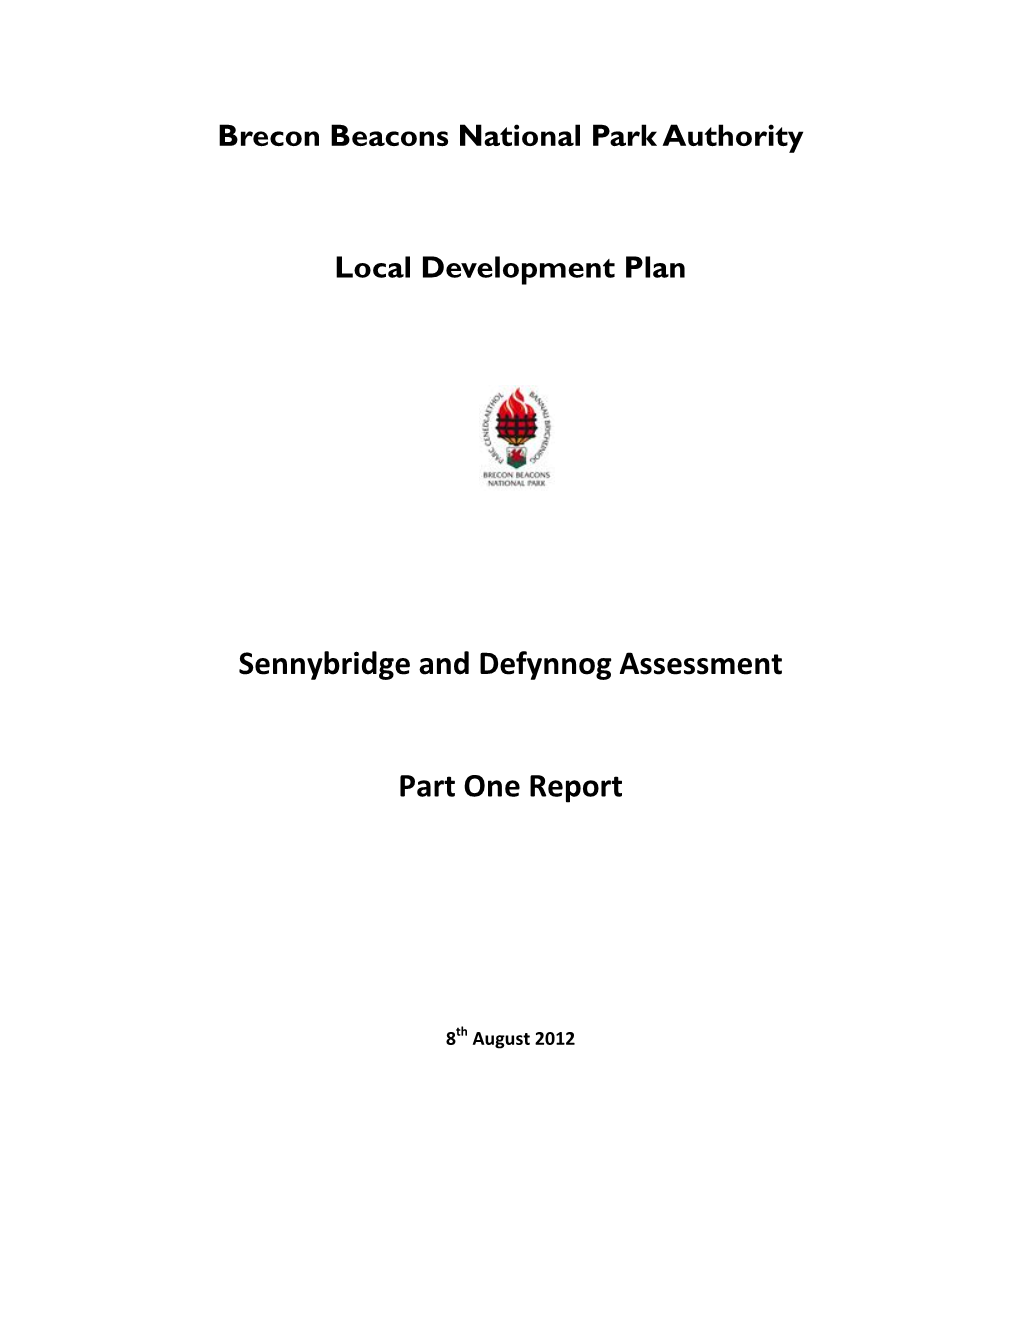 Sennybridge and Defynnog Assessment Part One Report